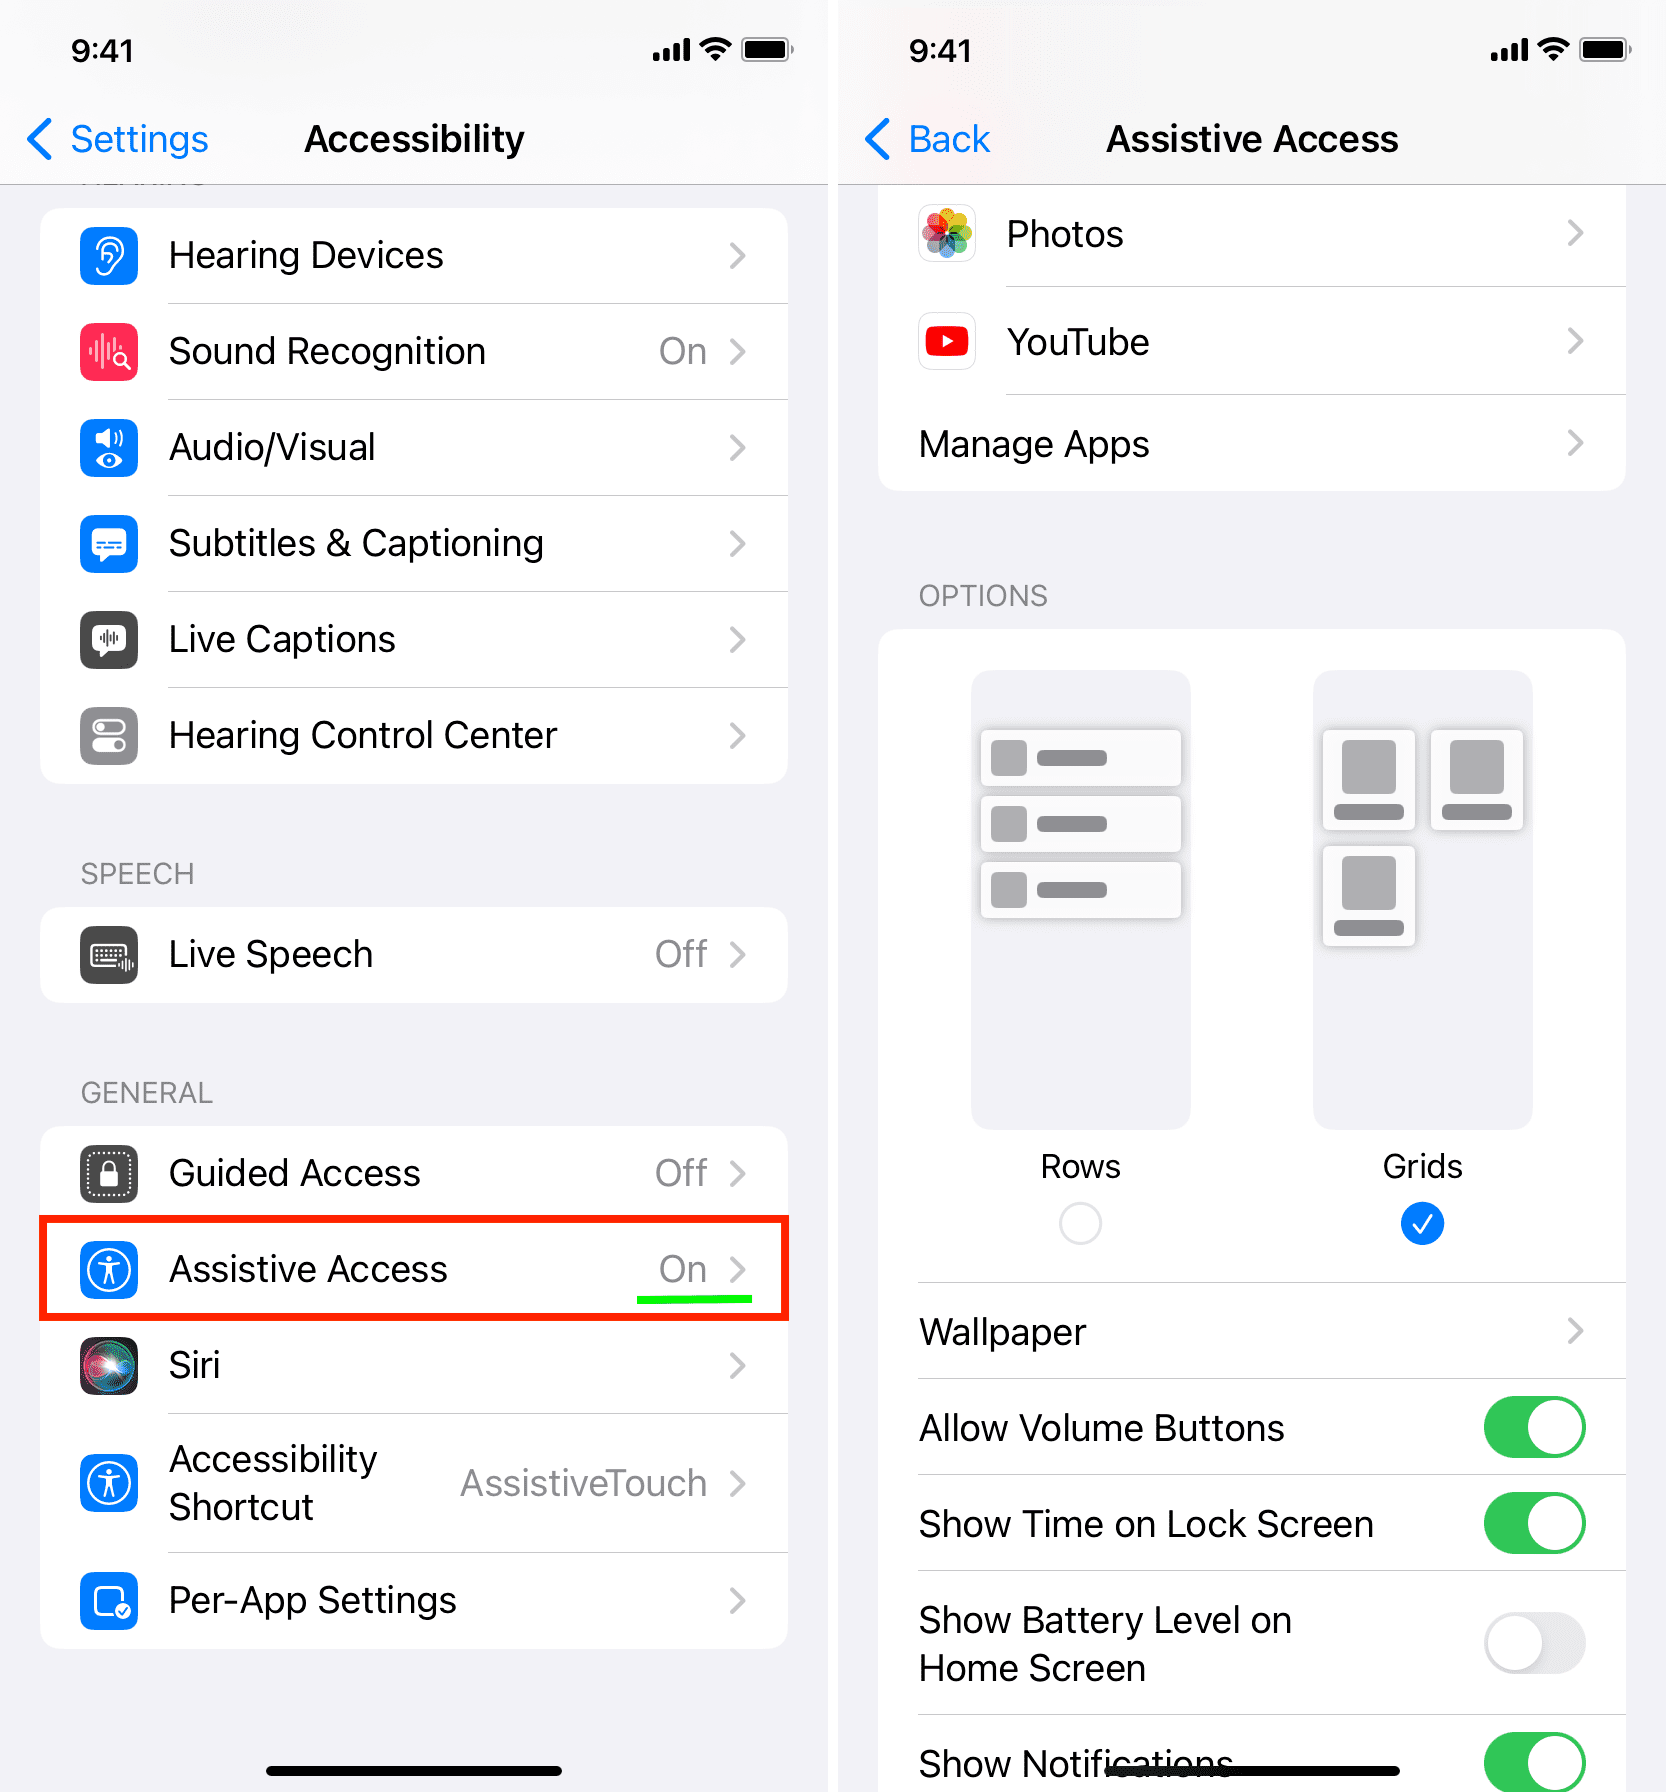 Tweak Assistive Access settings on iPhone